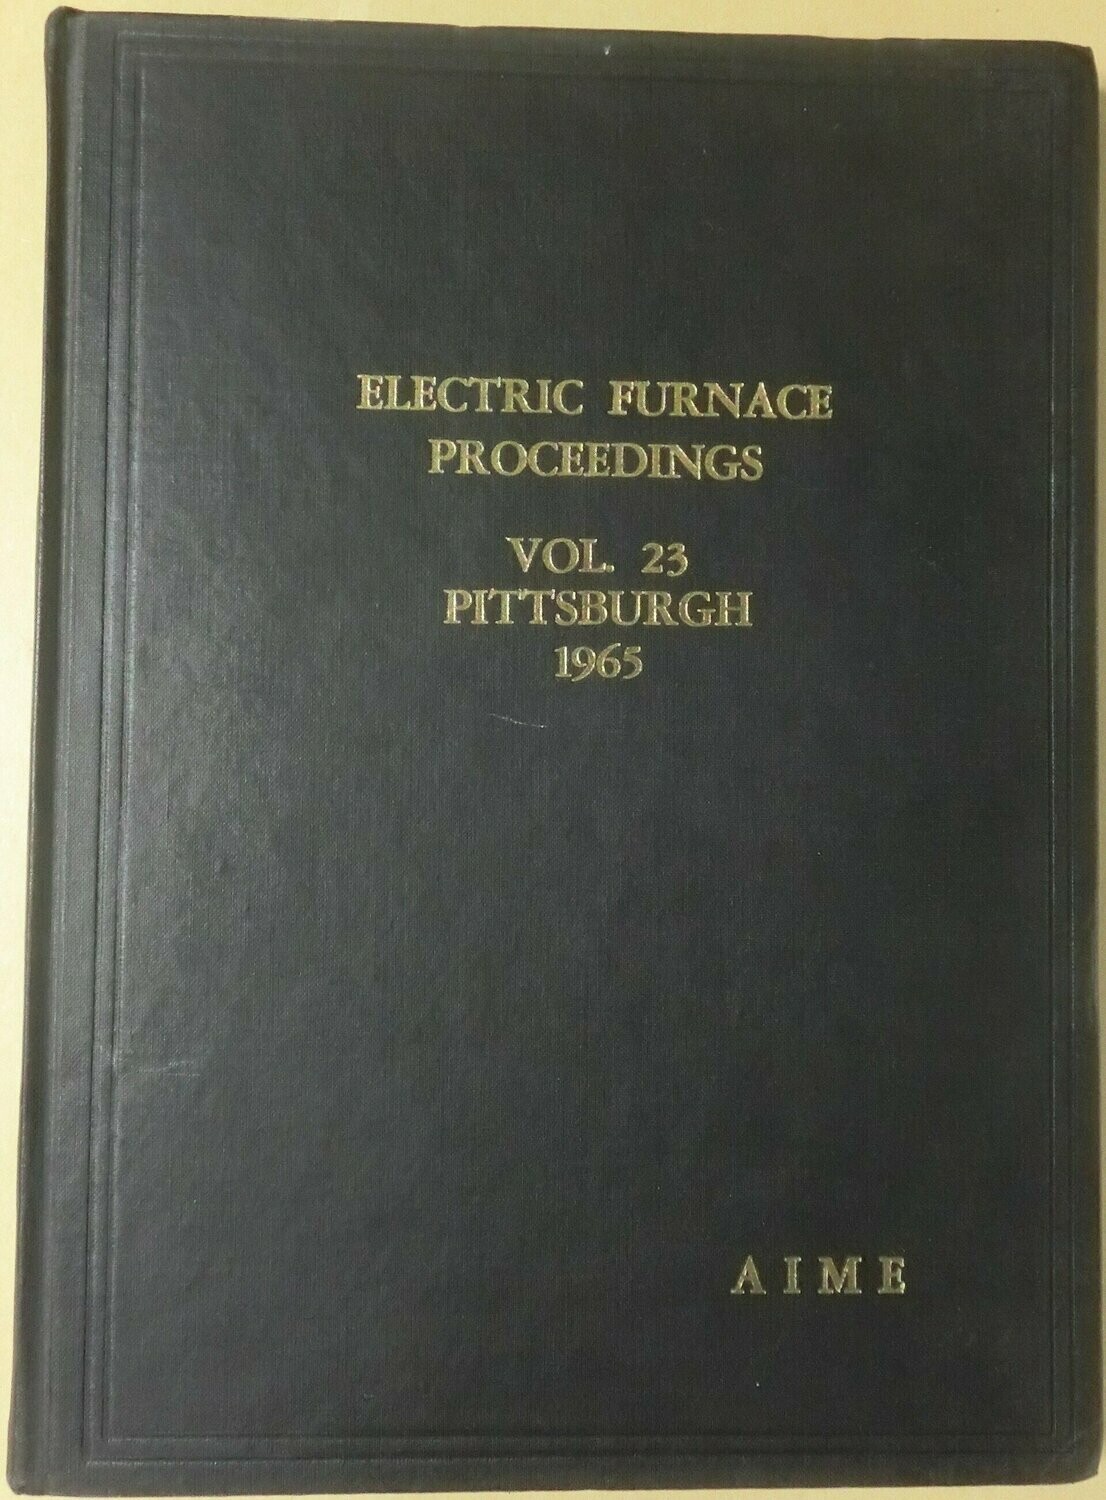 Electric furnace proceedings vol 23 Pittsburgh 1965